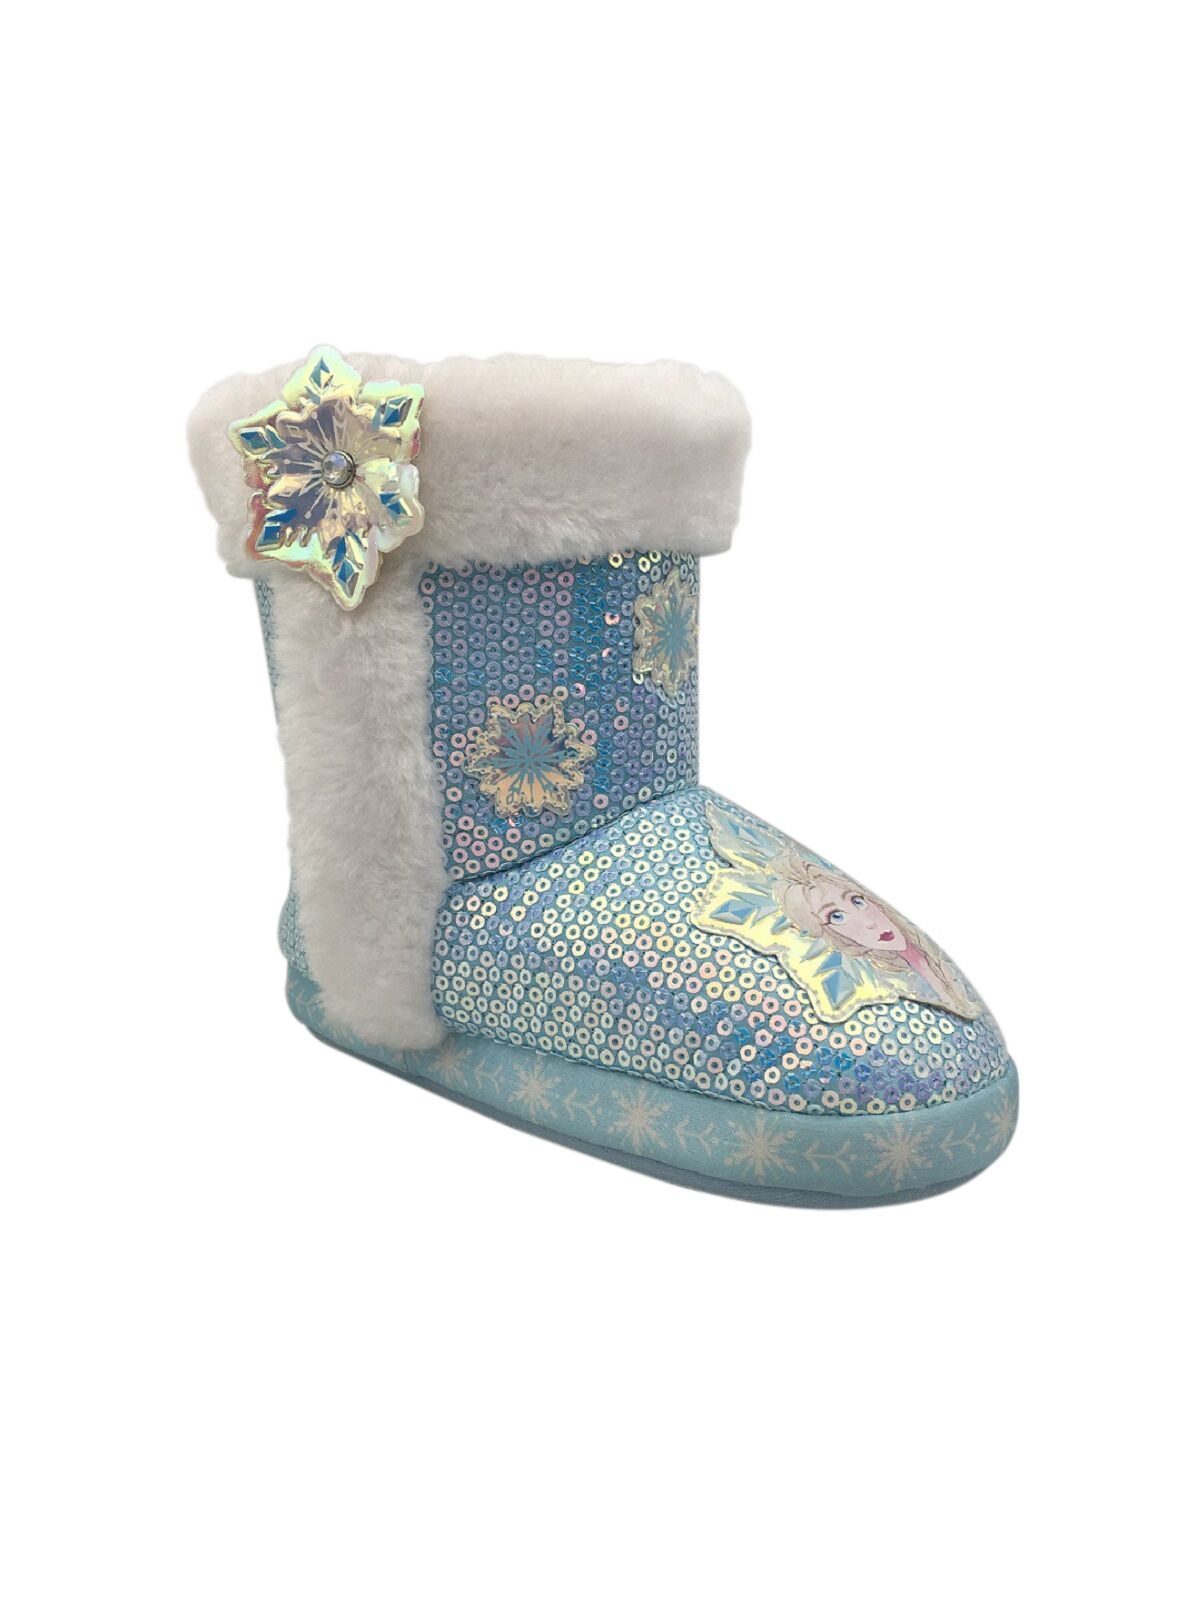 Disney Frozen Toddler Girls Blue Sequin Plush Slipper Boots House Shoes Size 7//8